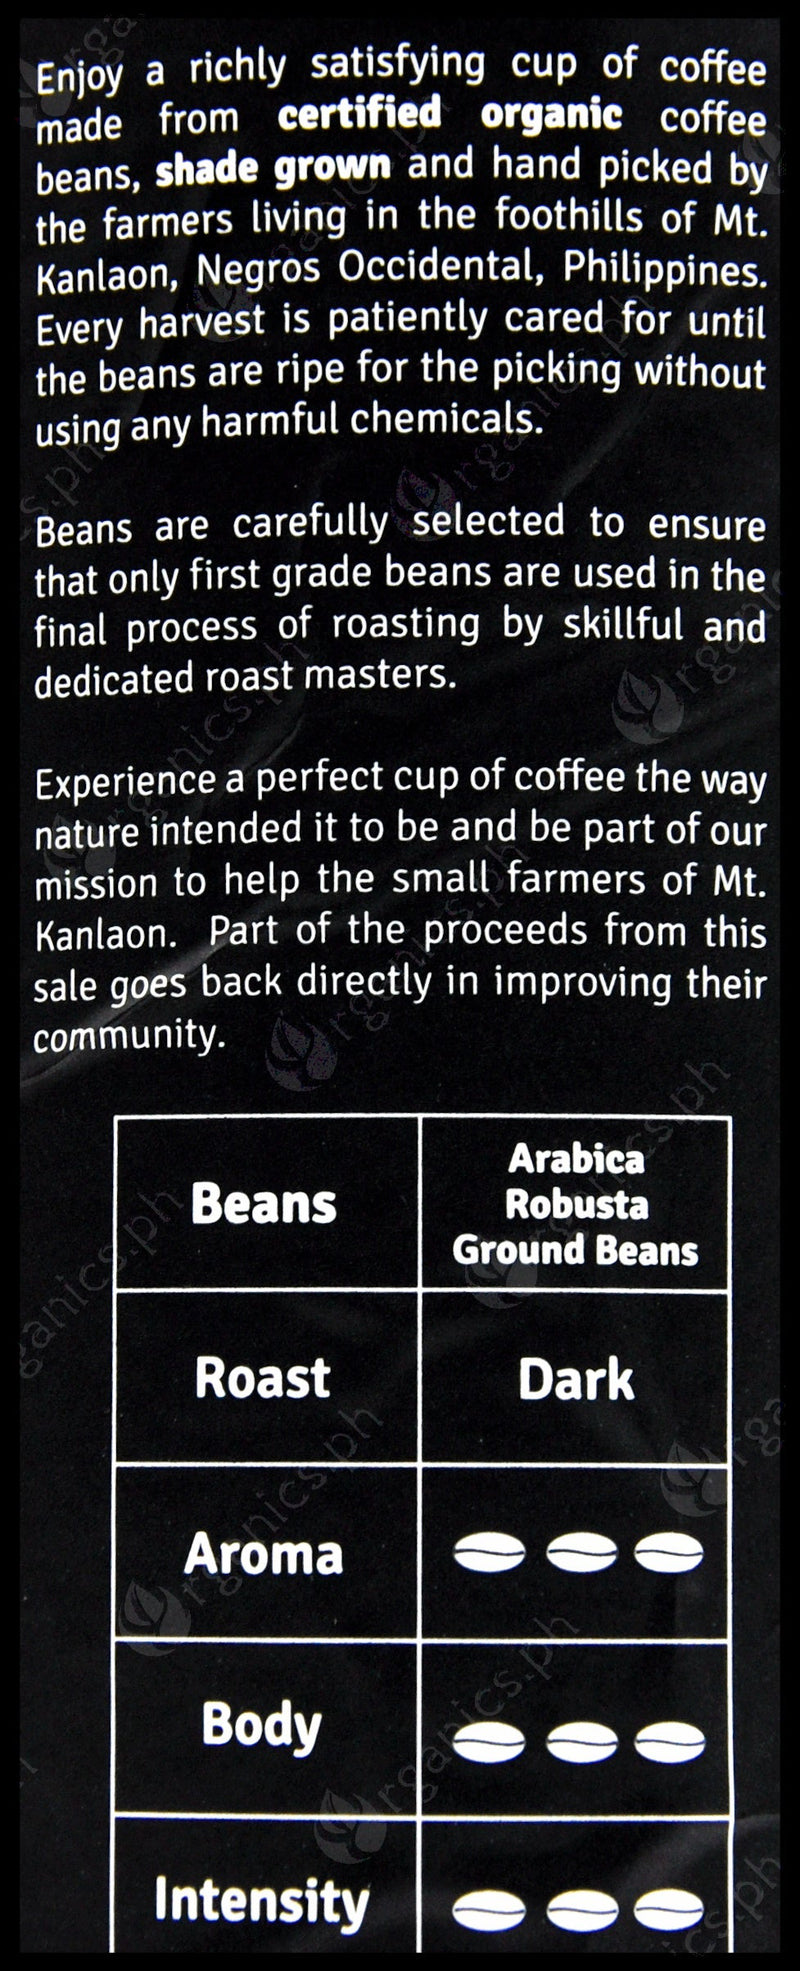 Organic Harvest Coffee Ground Canister - Pulaw Brew (250g) - Organics.ph